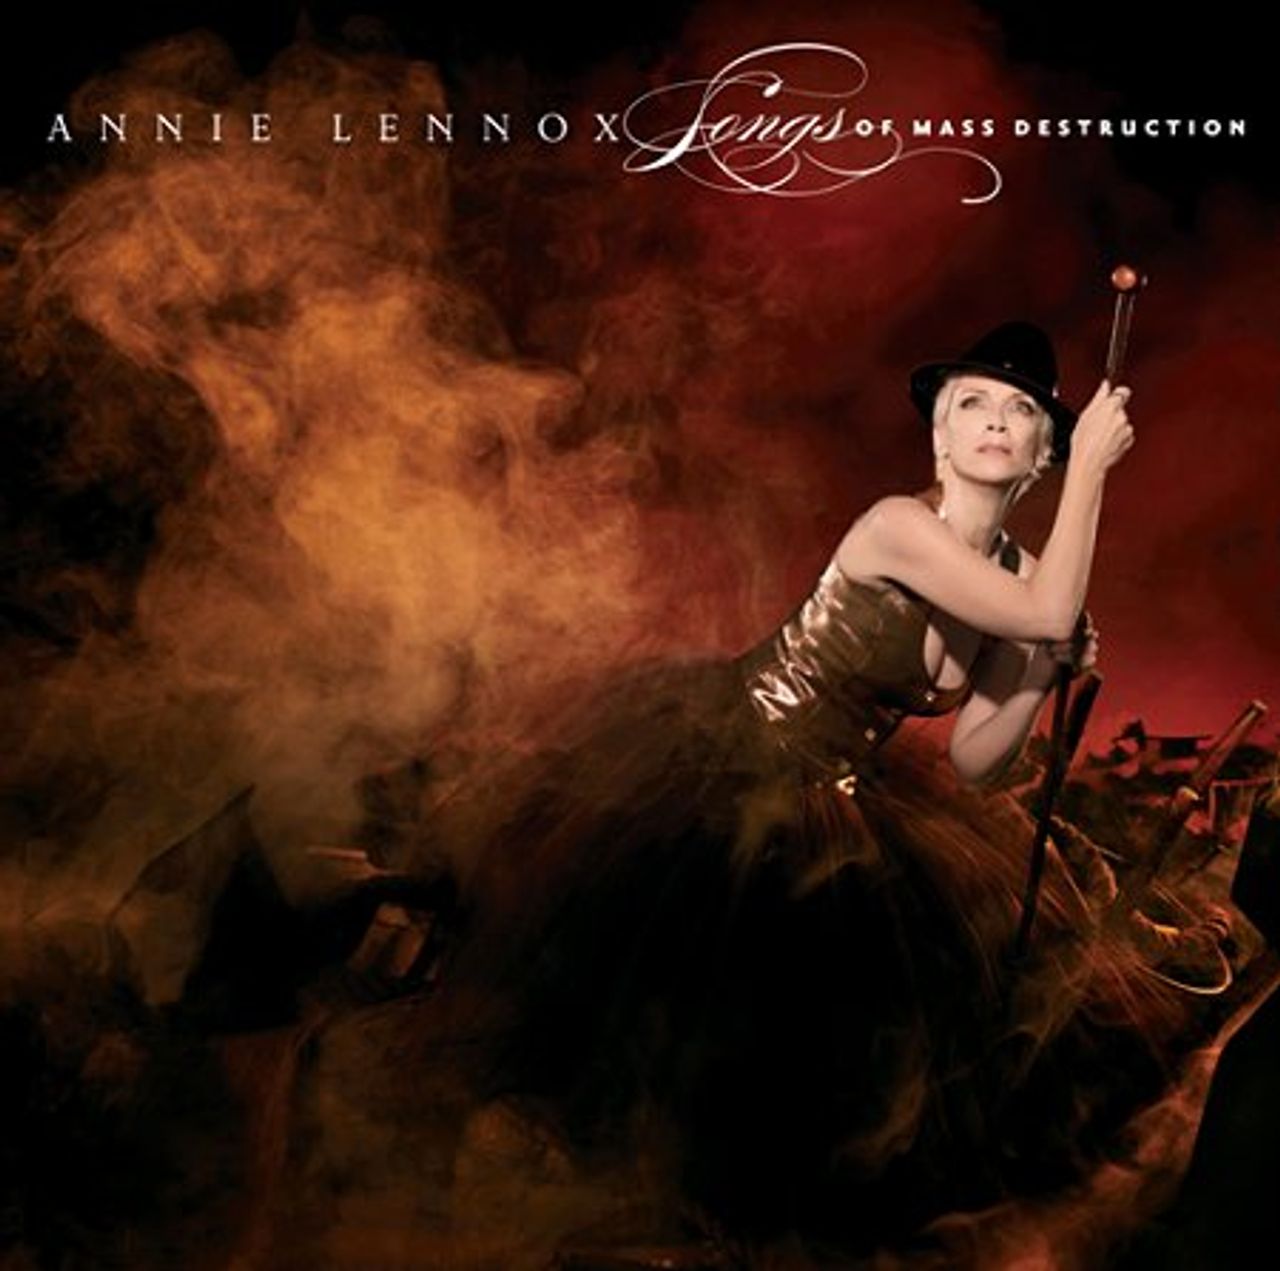 Annie Lennox Songs Of Mass Destruction UK 2 CD album set (Double CD) 88697152582